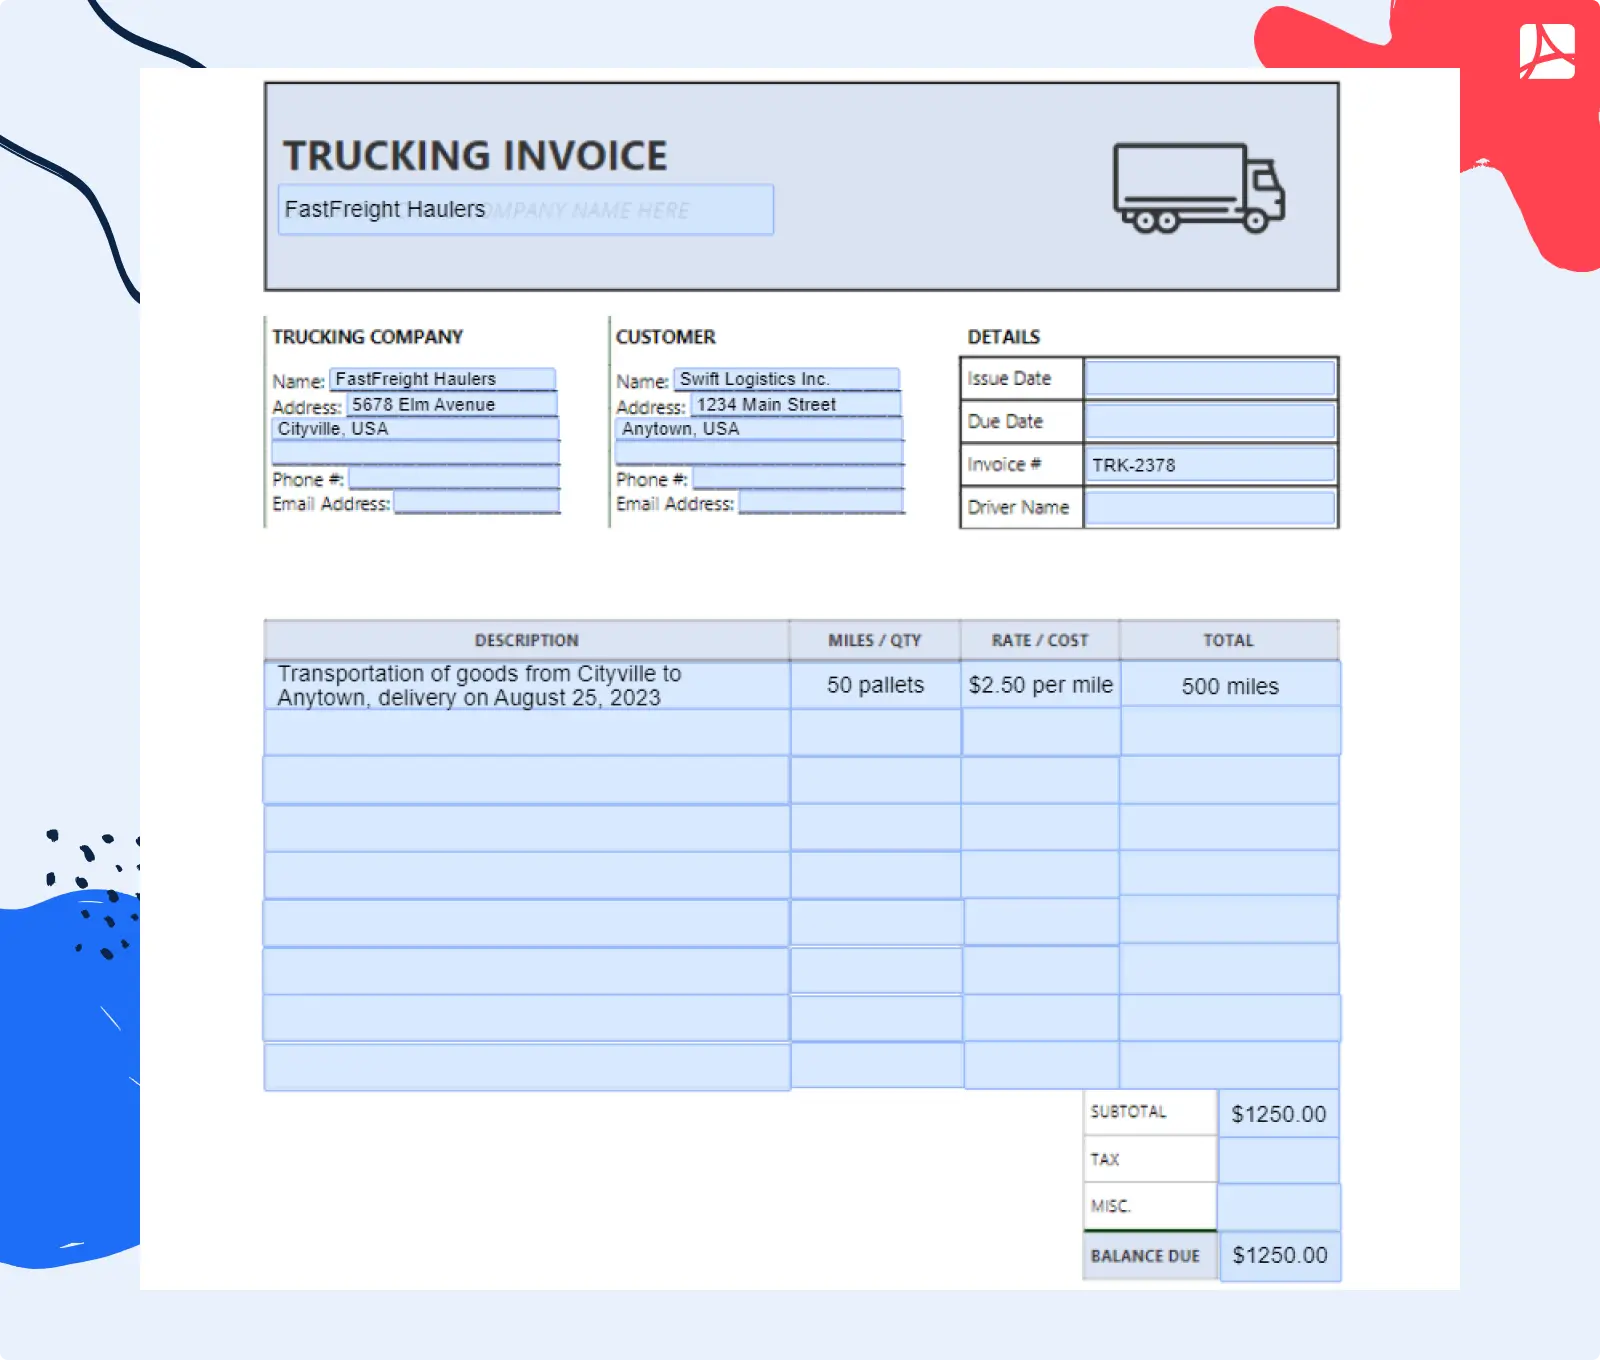 Regular trucking invoice